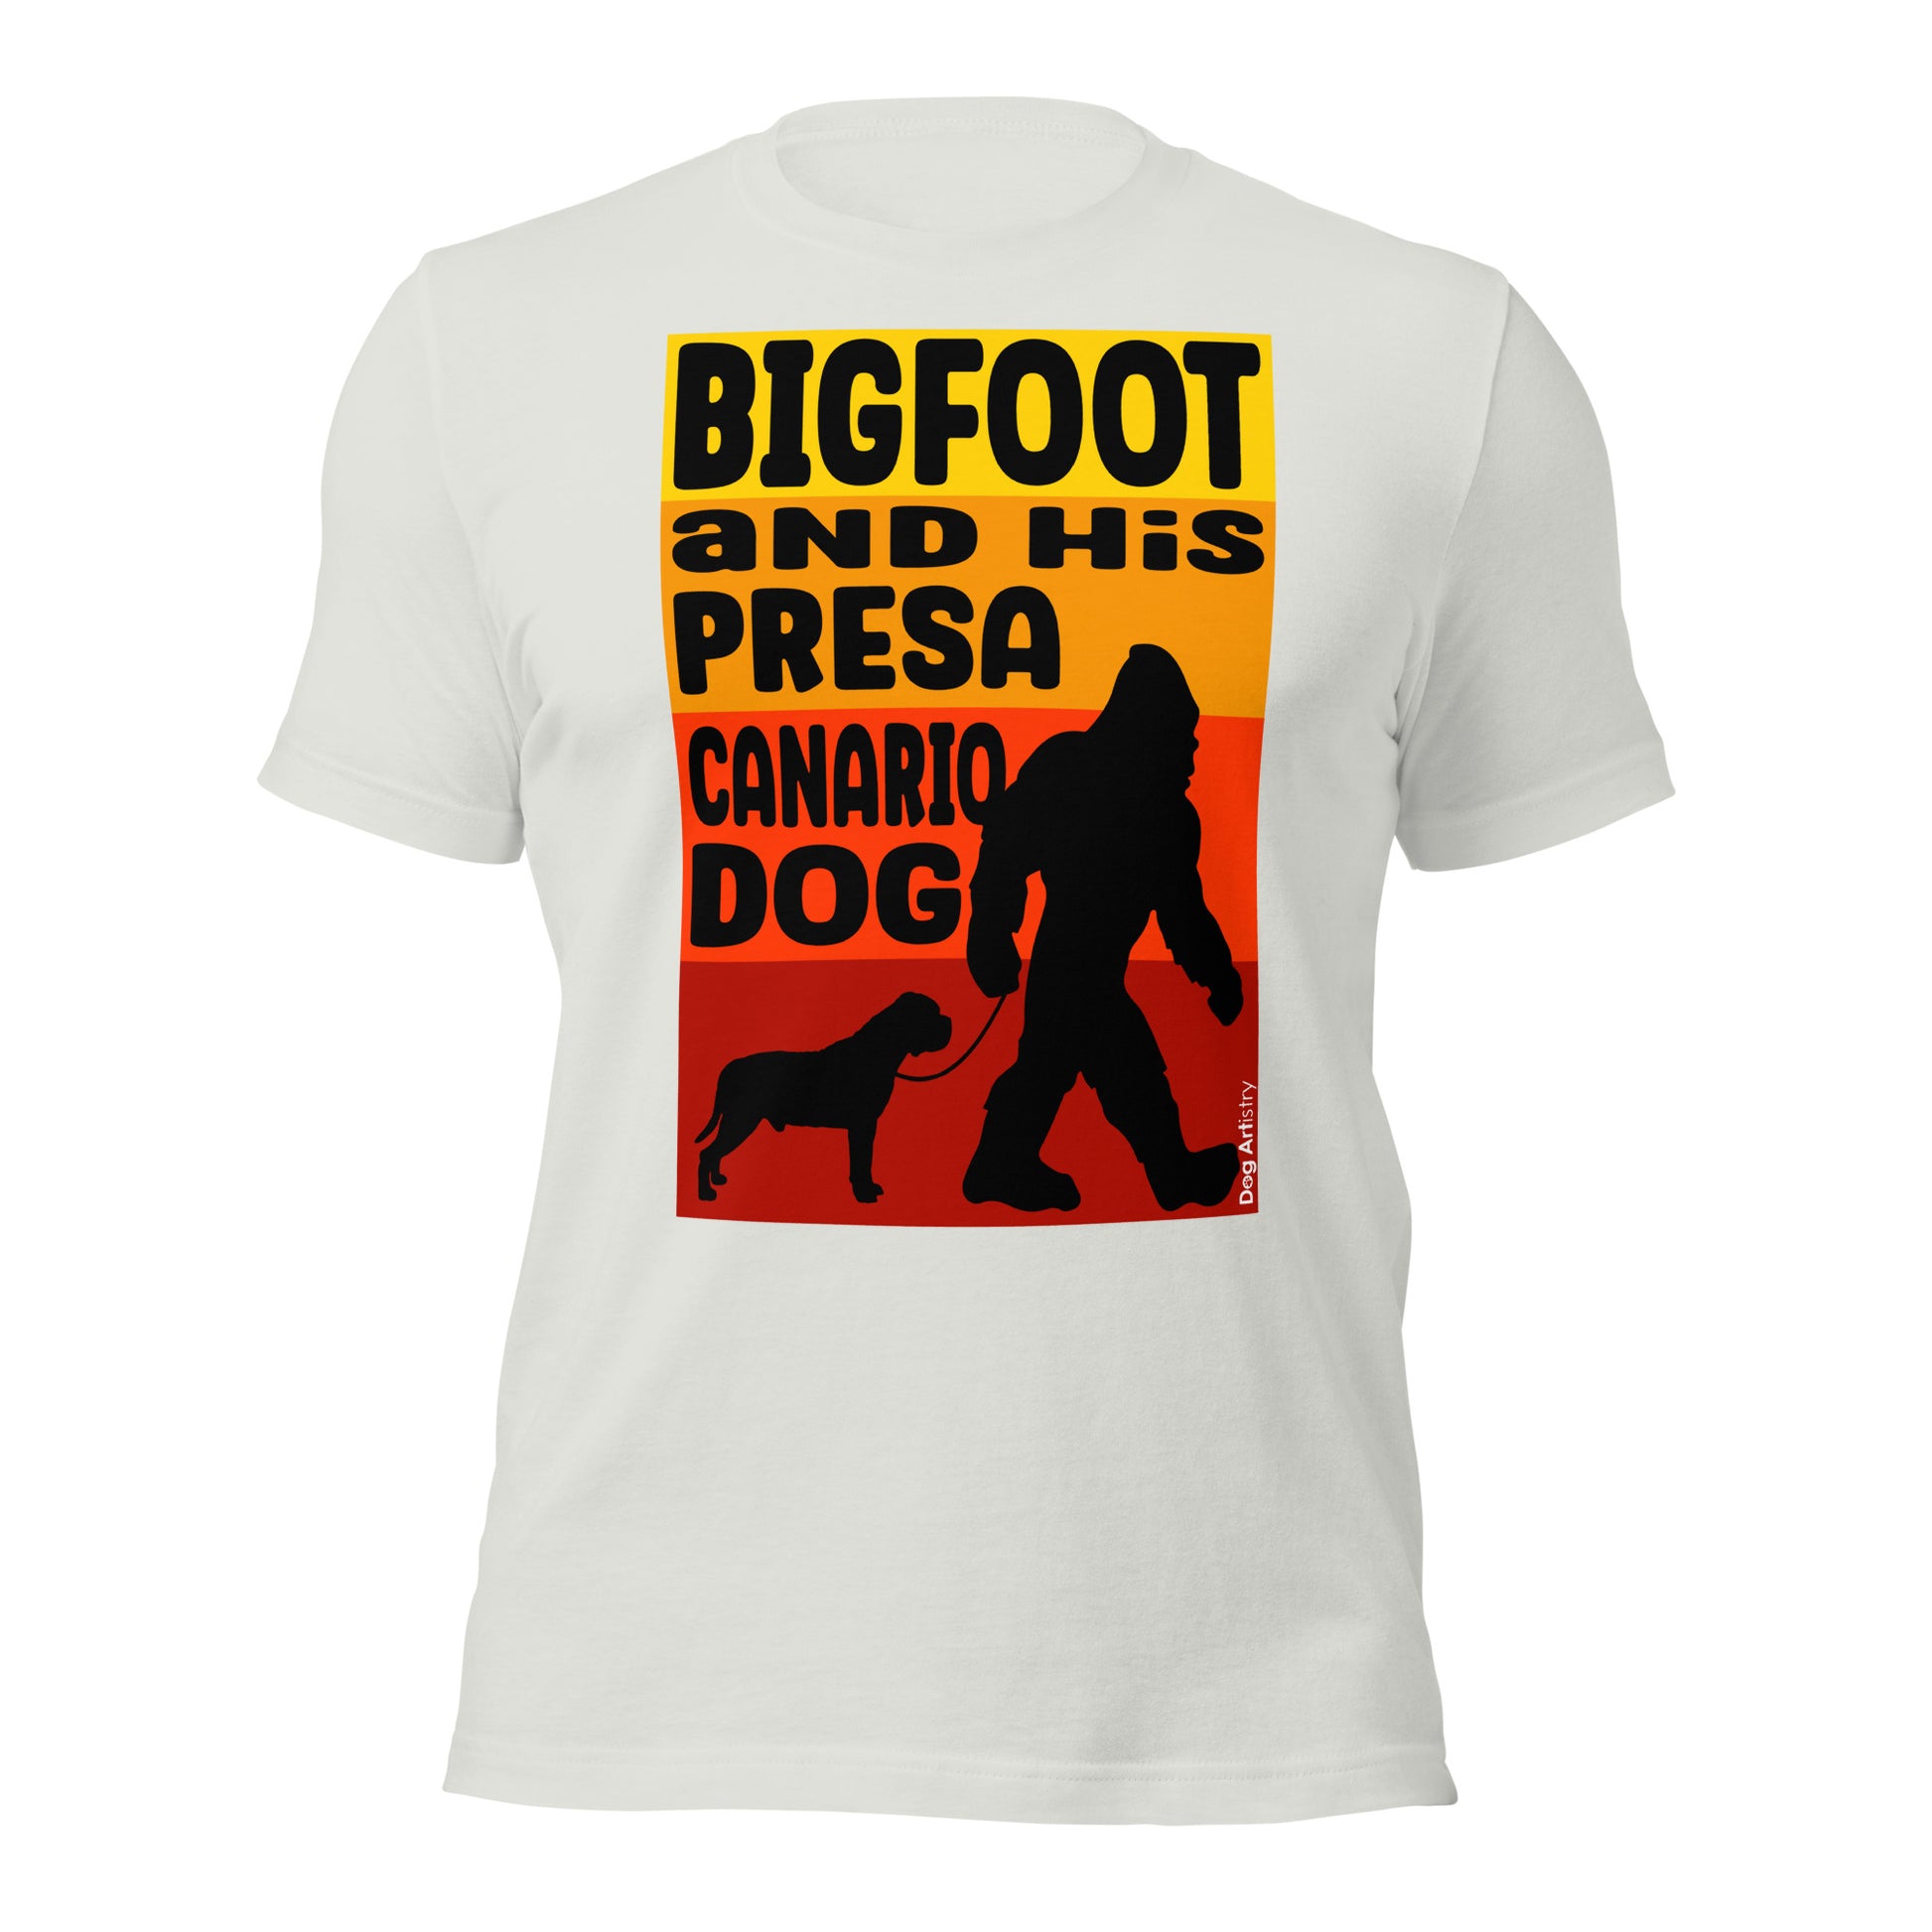 Bigfoot and his presa canario unisex silver t-shirt by Dog Artistry.